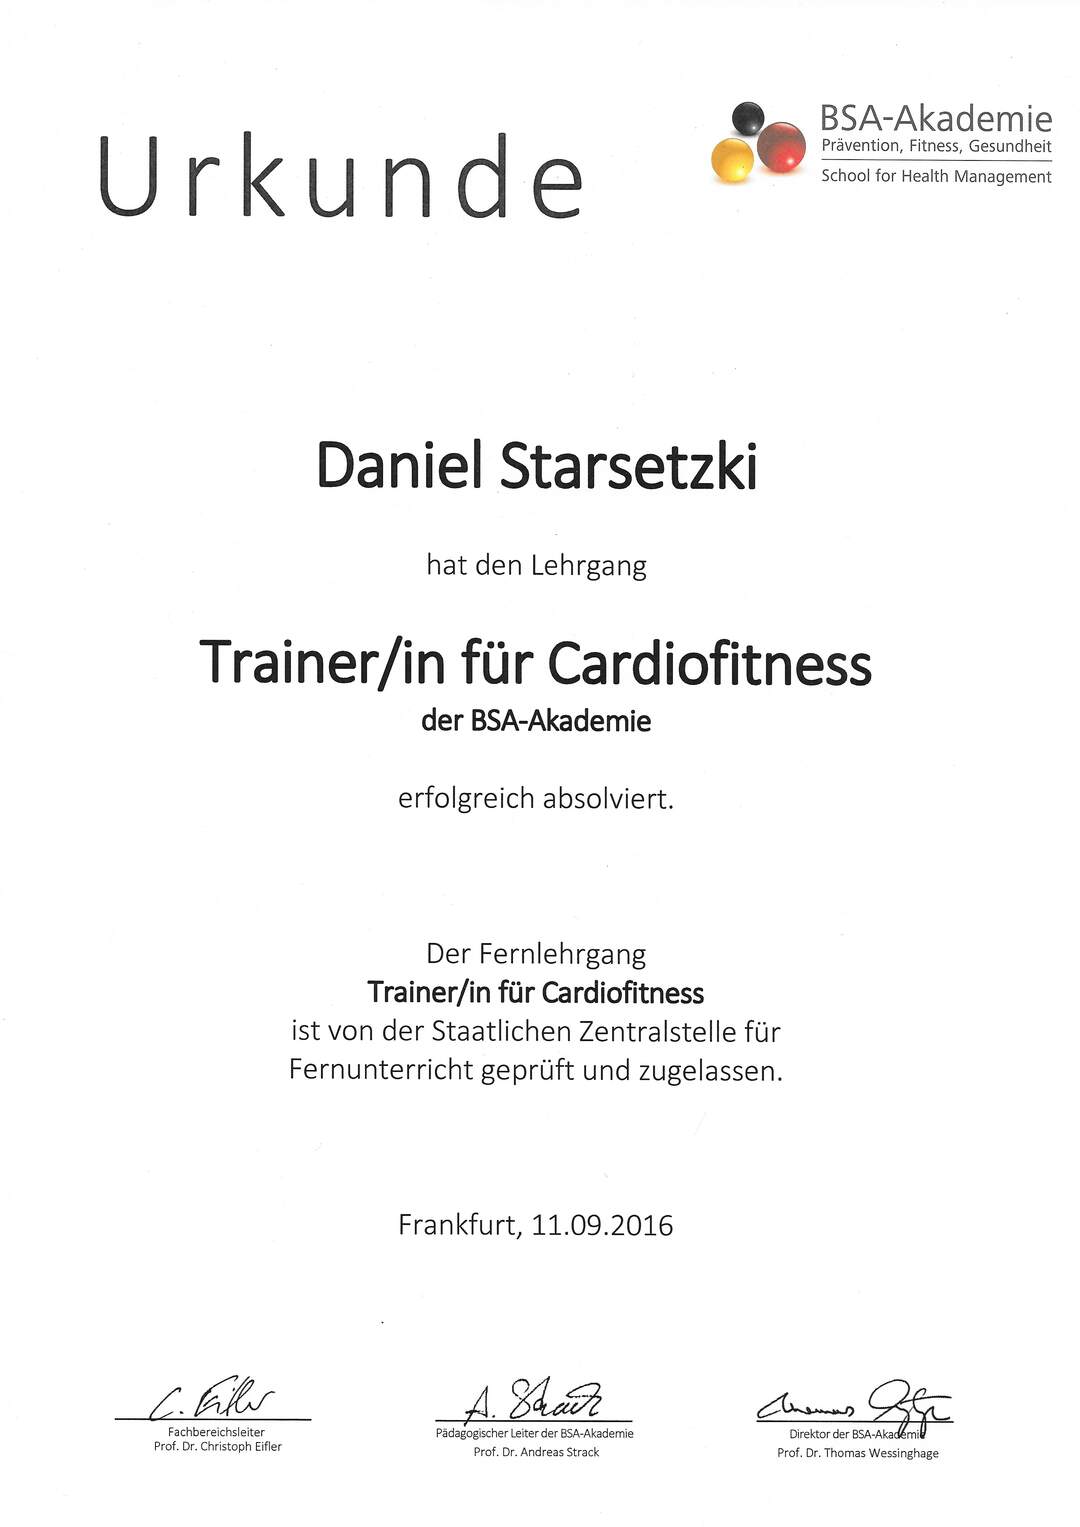 Daniel Starsetzki Trainer für Cardiofitness Karlsruhe